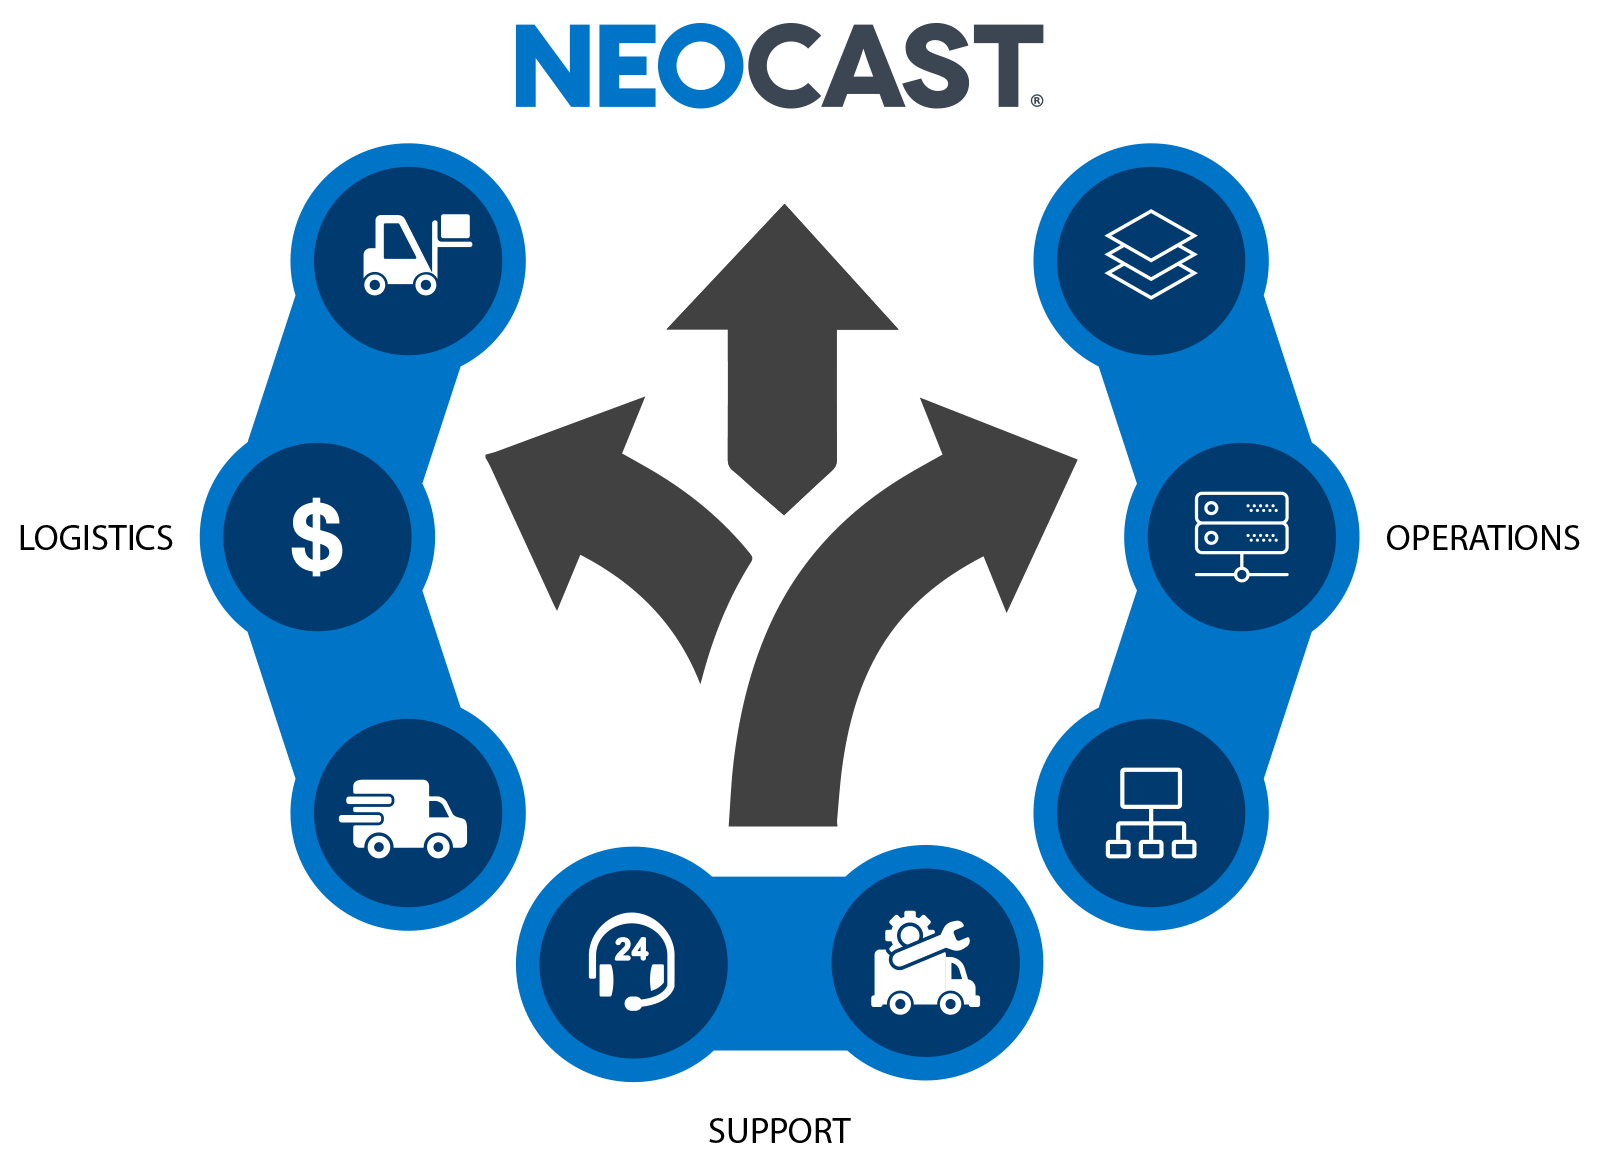 NEOCAST Digital Signage Platform